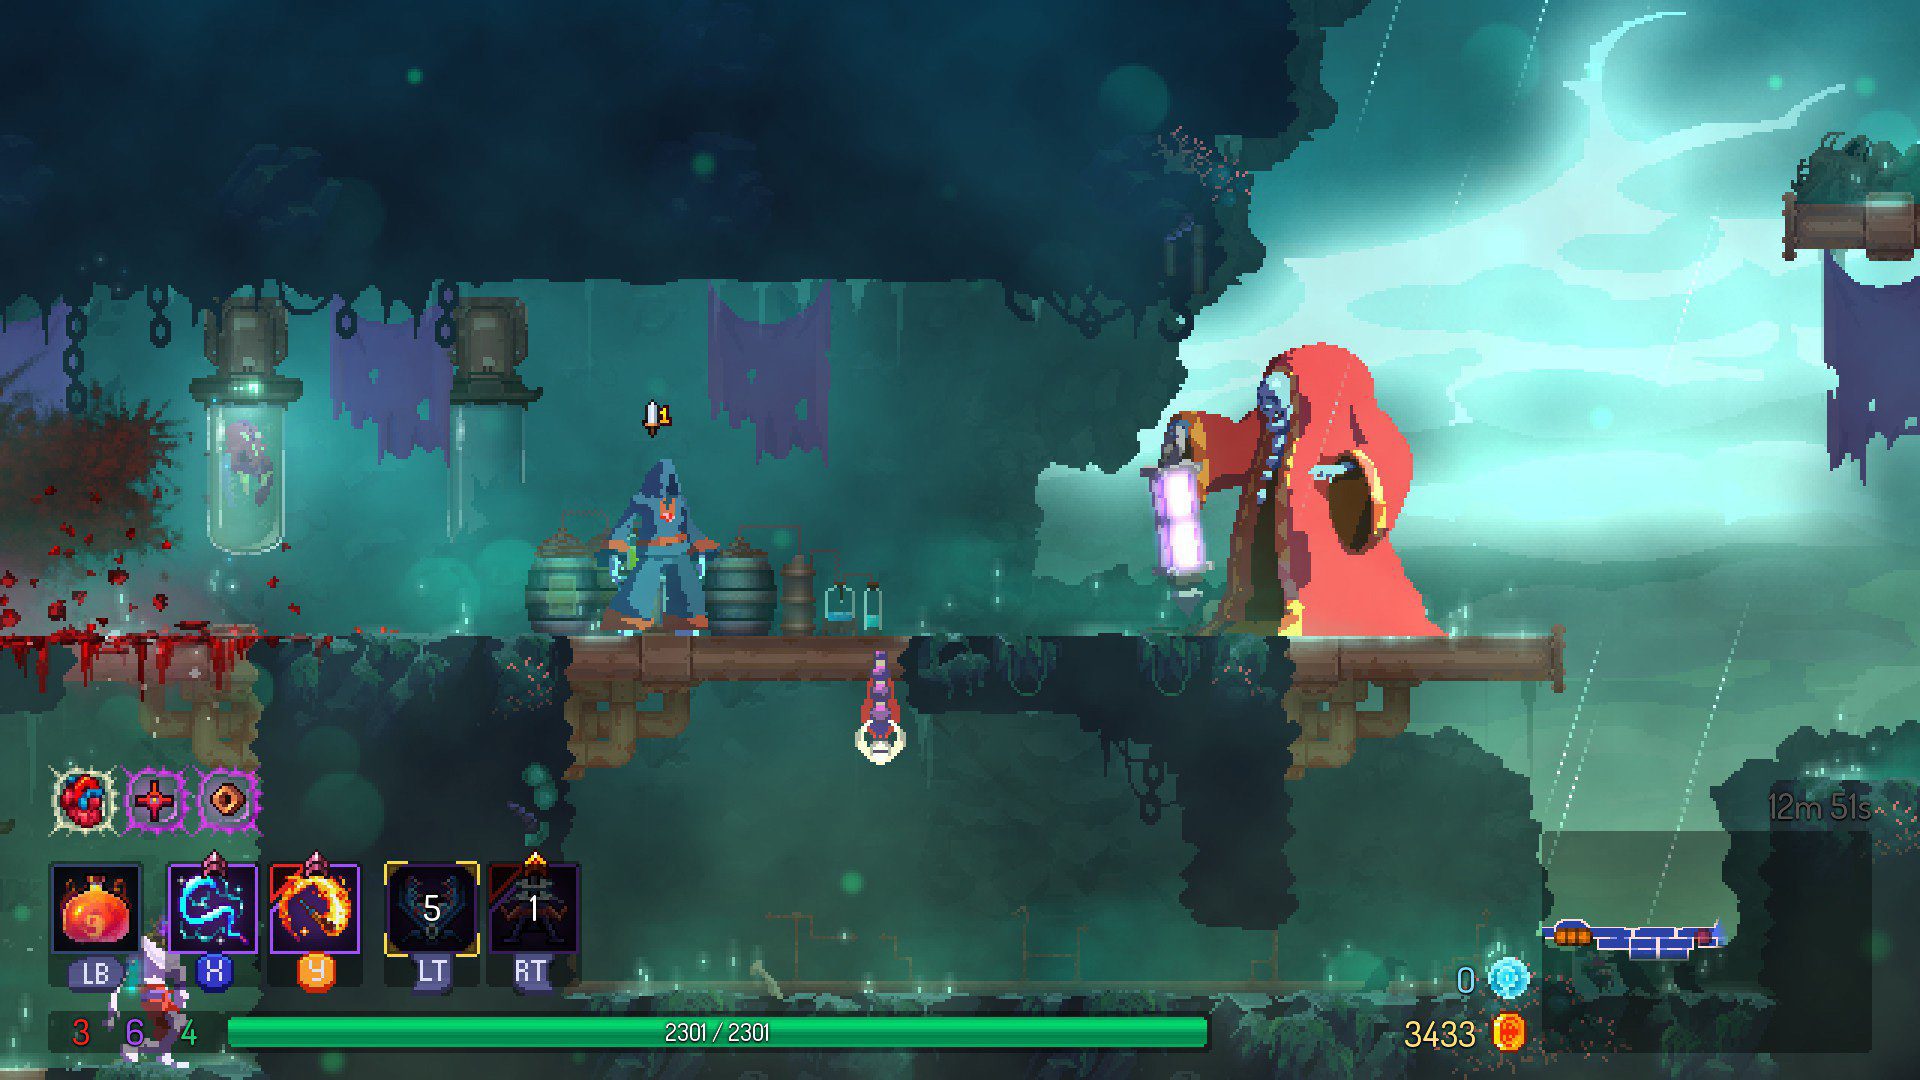 Dead cells gameplay screenshot, skeleton boss fight